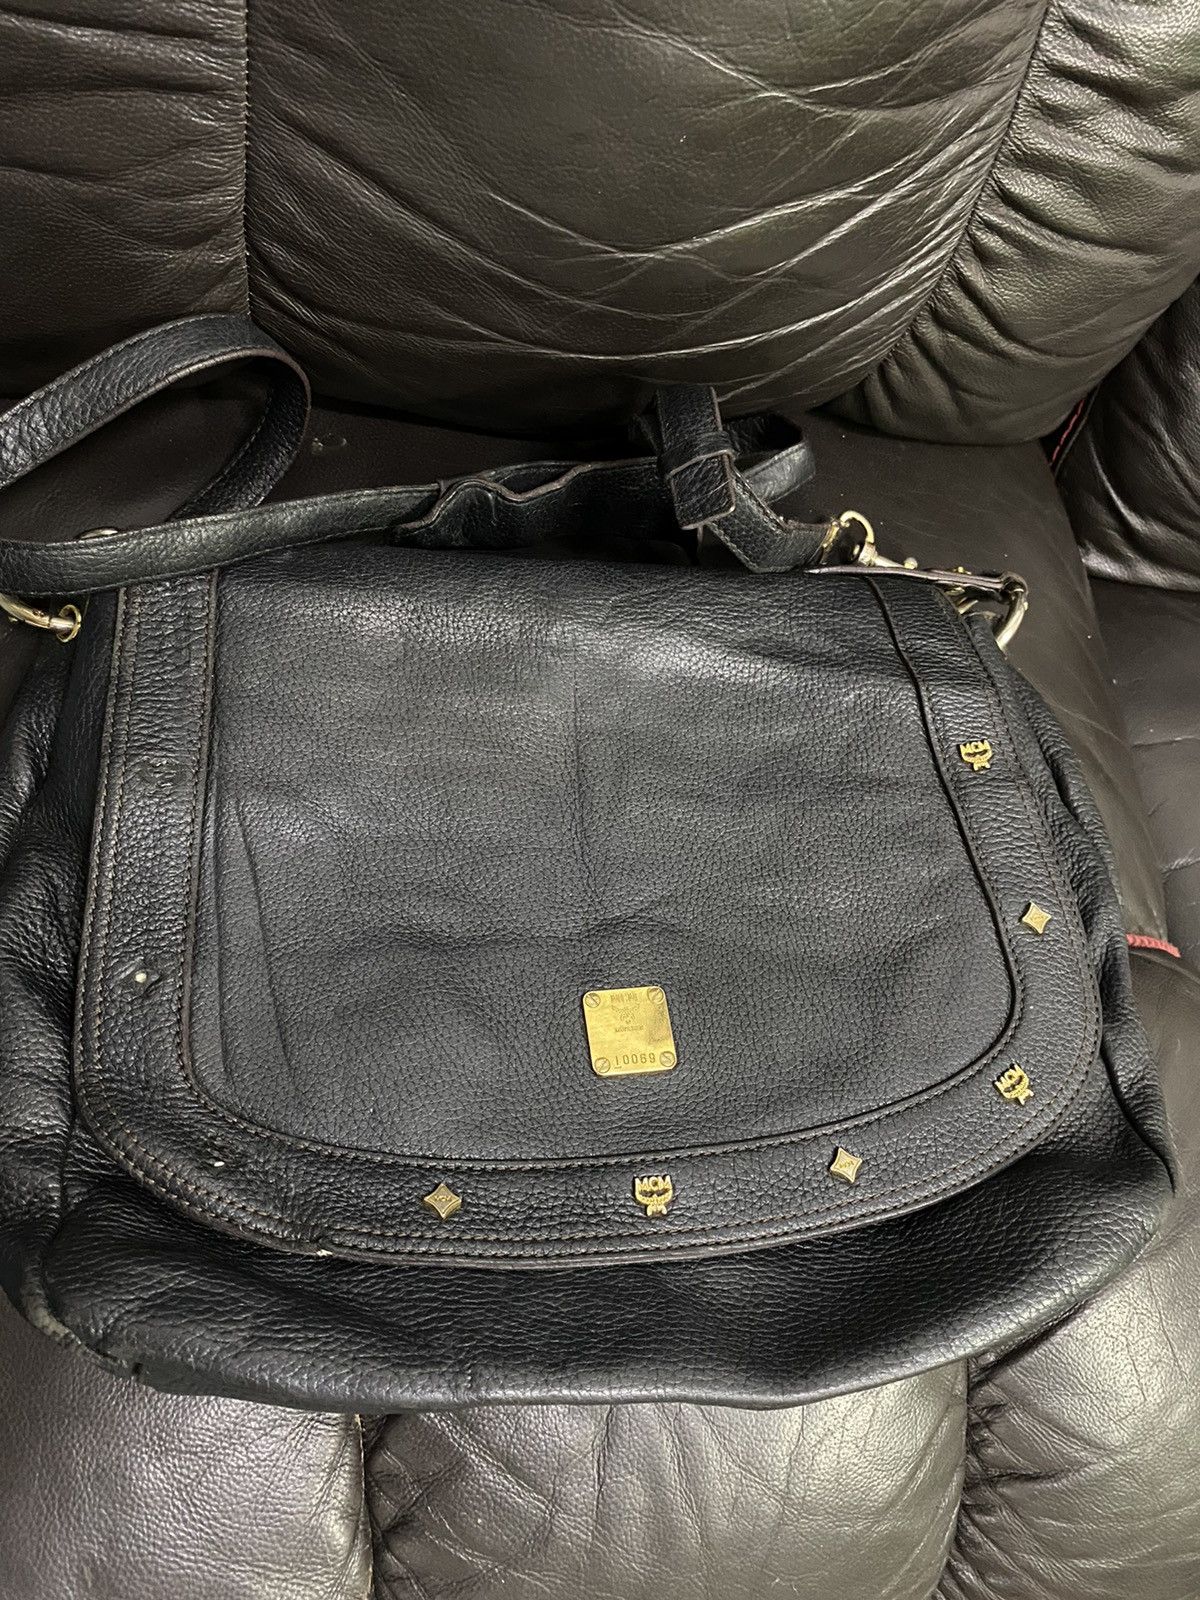 Authentic MCM Leather Shoulder Bag - 25